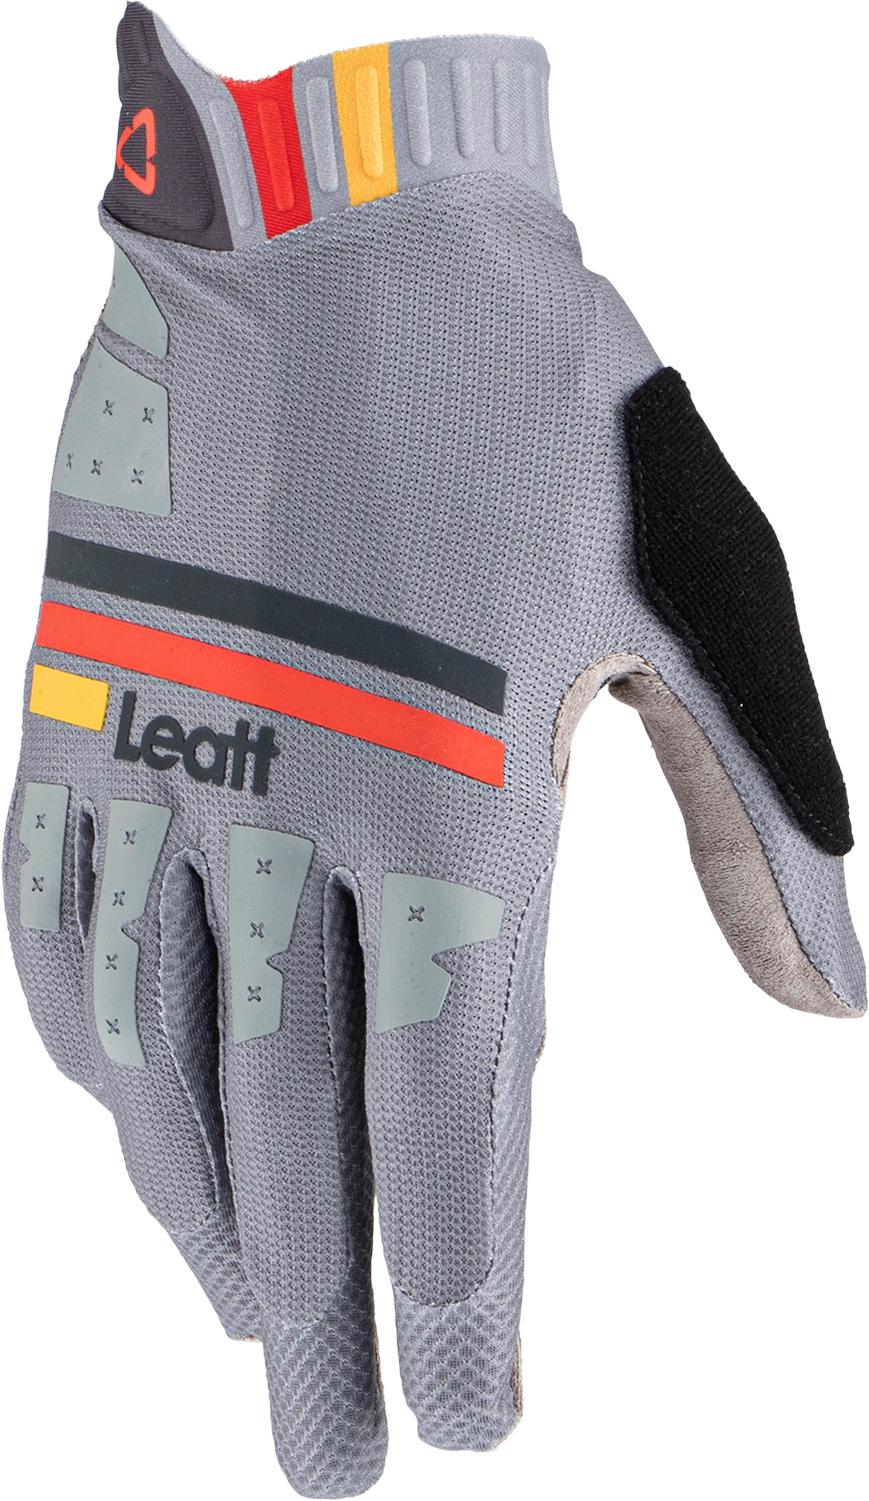 Leatt Mtb 2.0 X-flow Gloves - Titanium